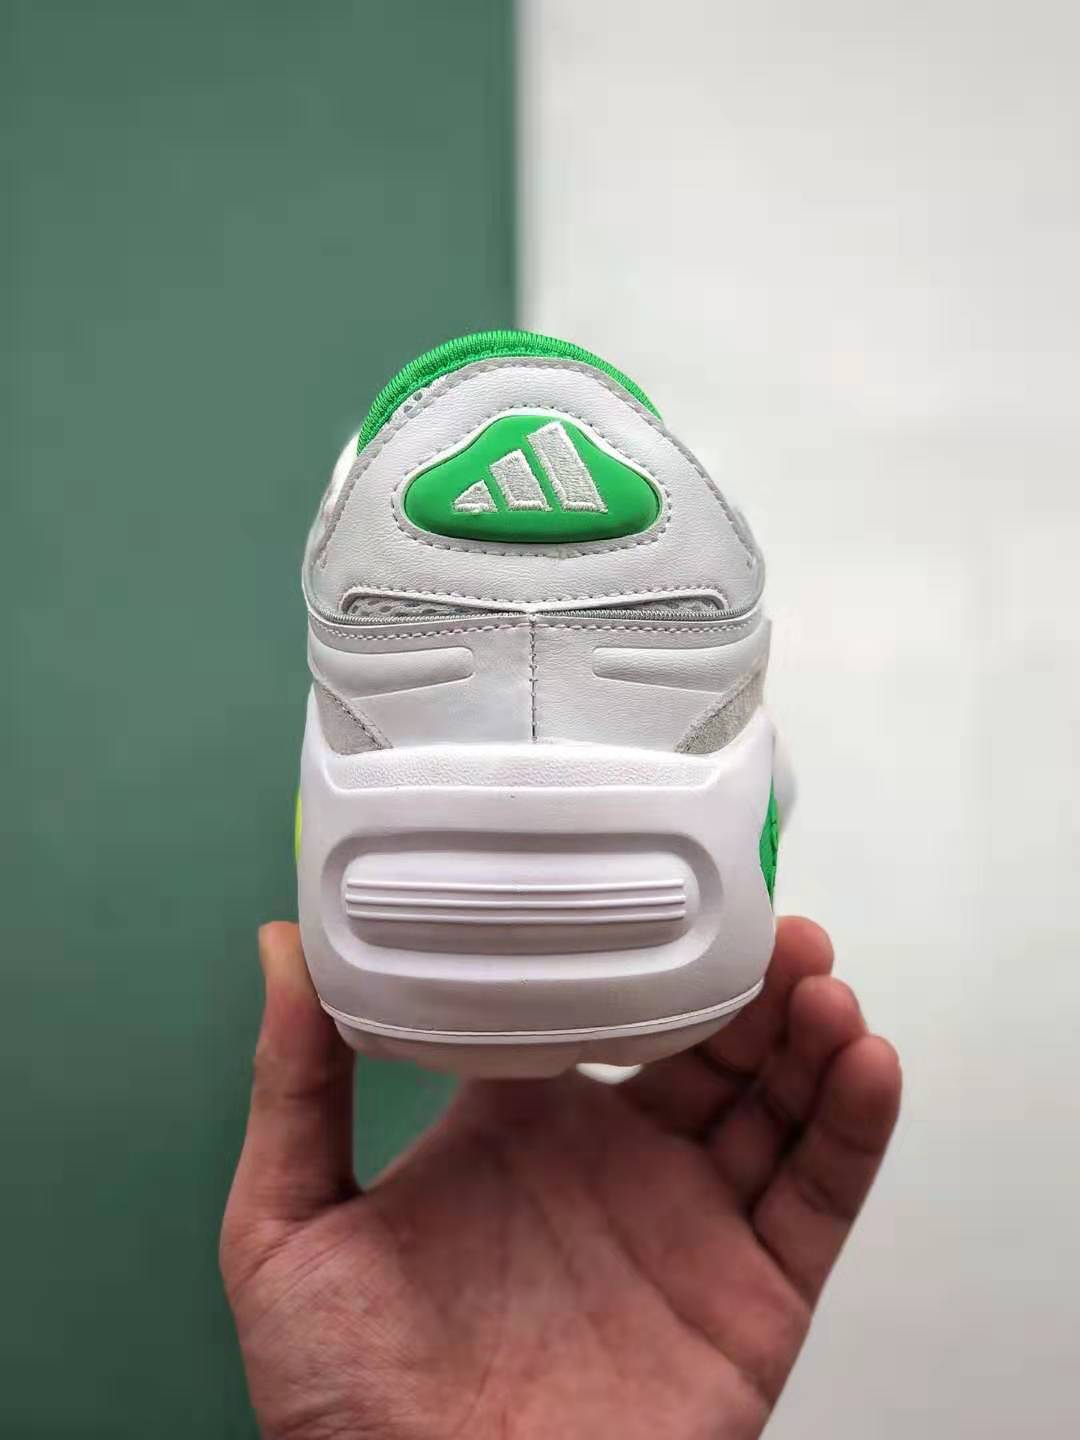 Adidas FYW S-97 Ronnie Fieg White Neon Sneakers | EF3646